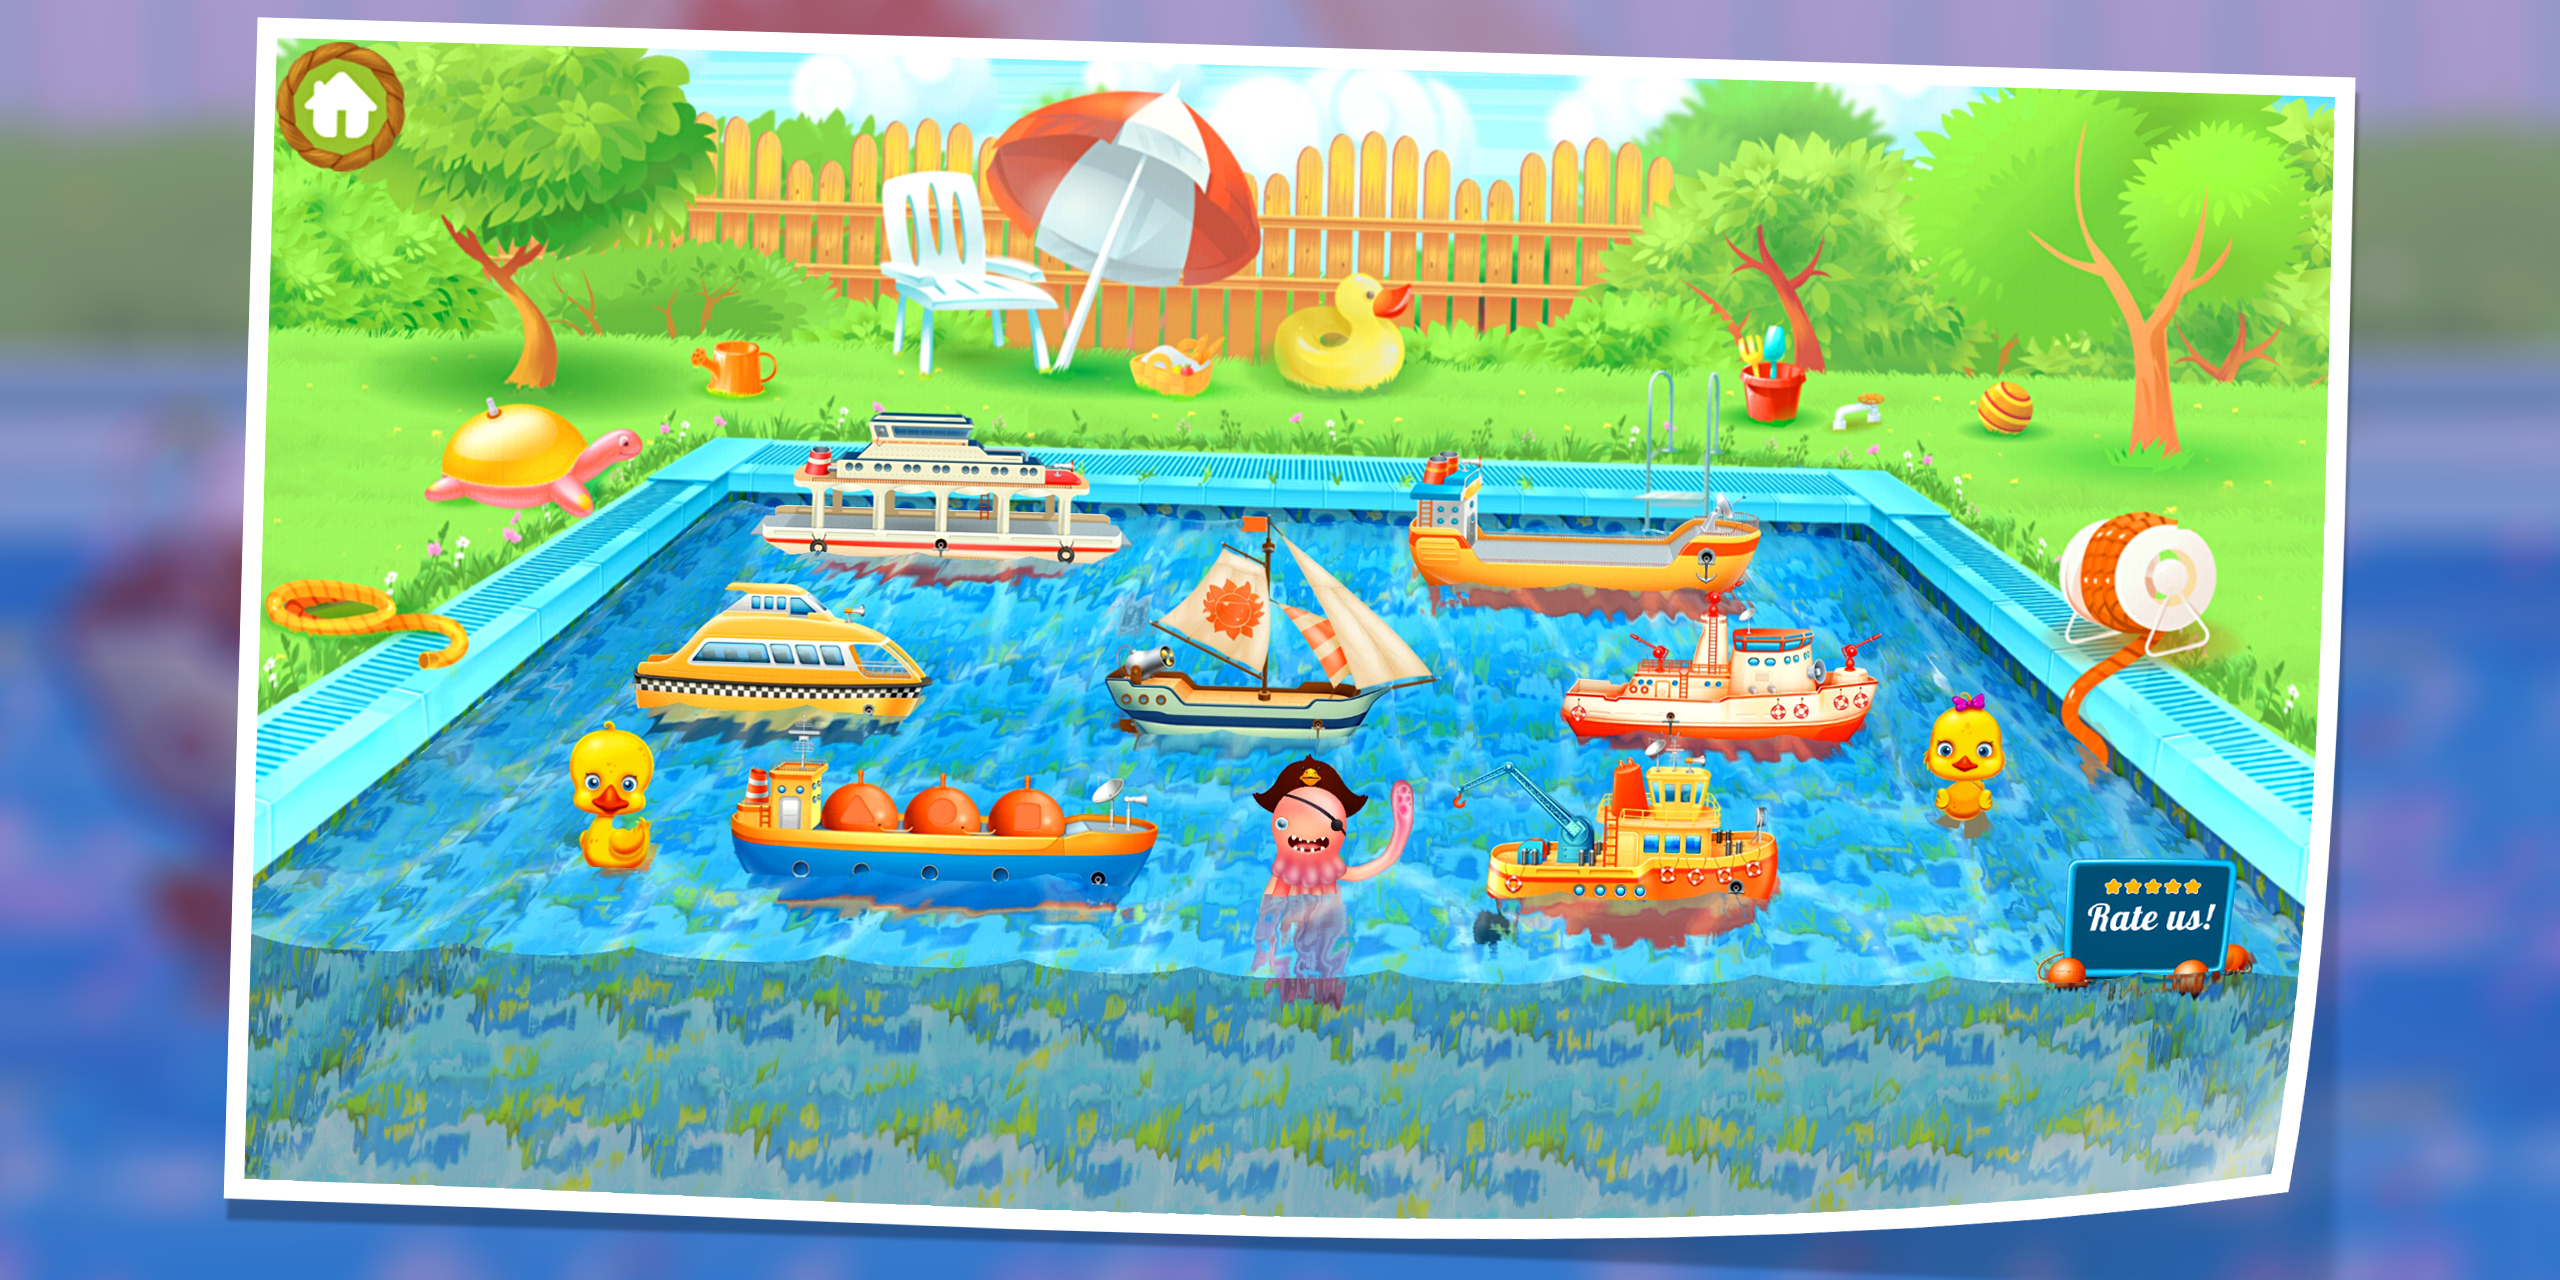 Android application Ships for Kids: Full Sail! screenshort